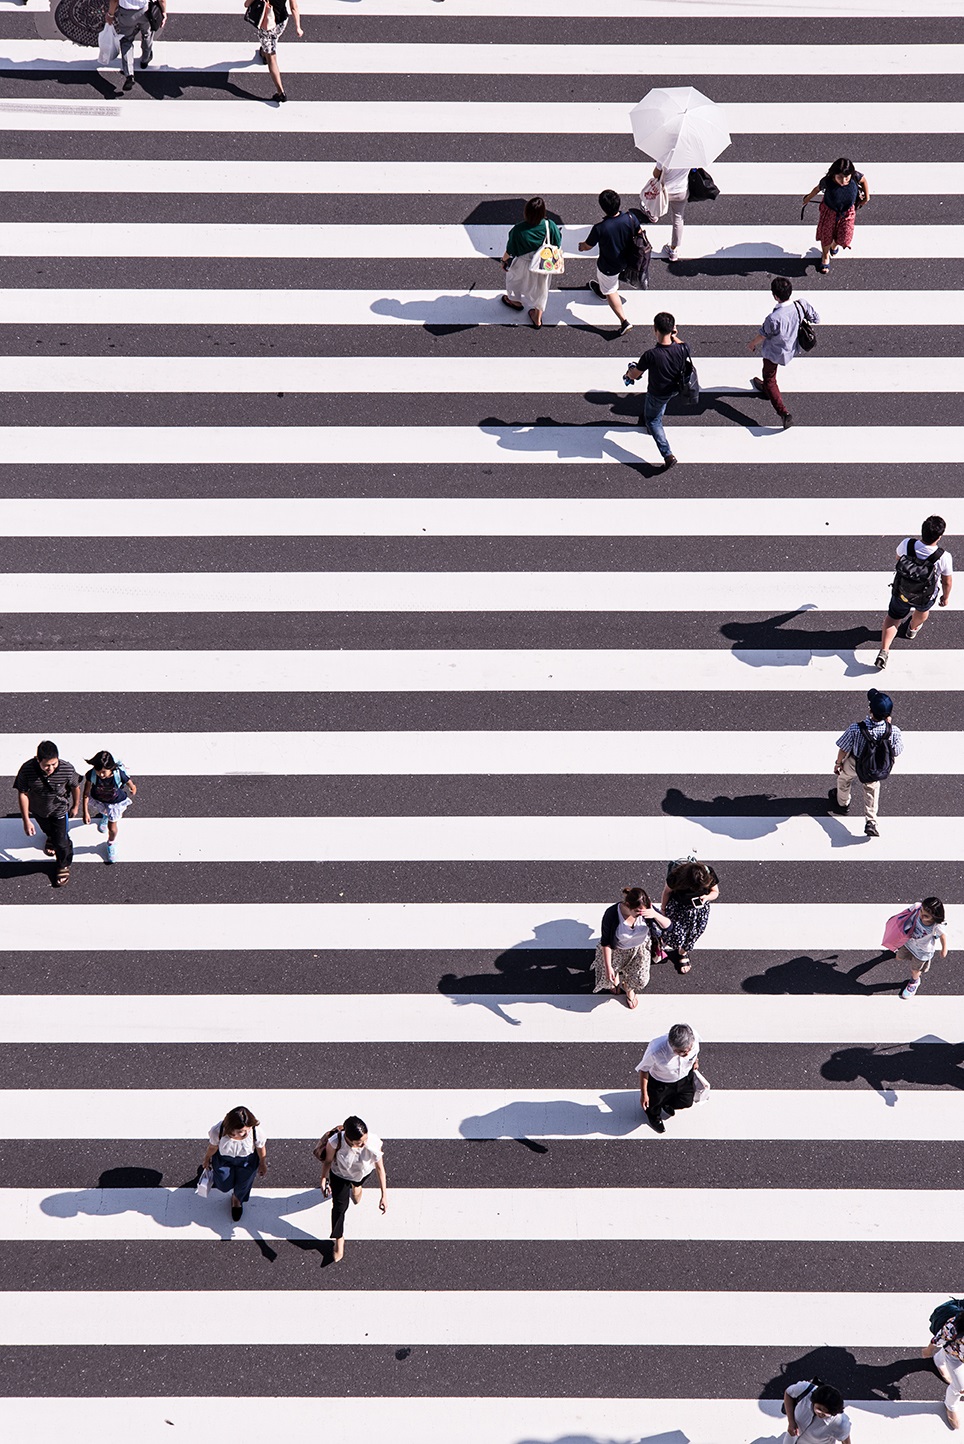 people walking on a grid